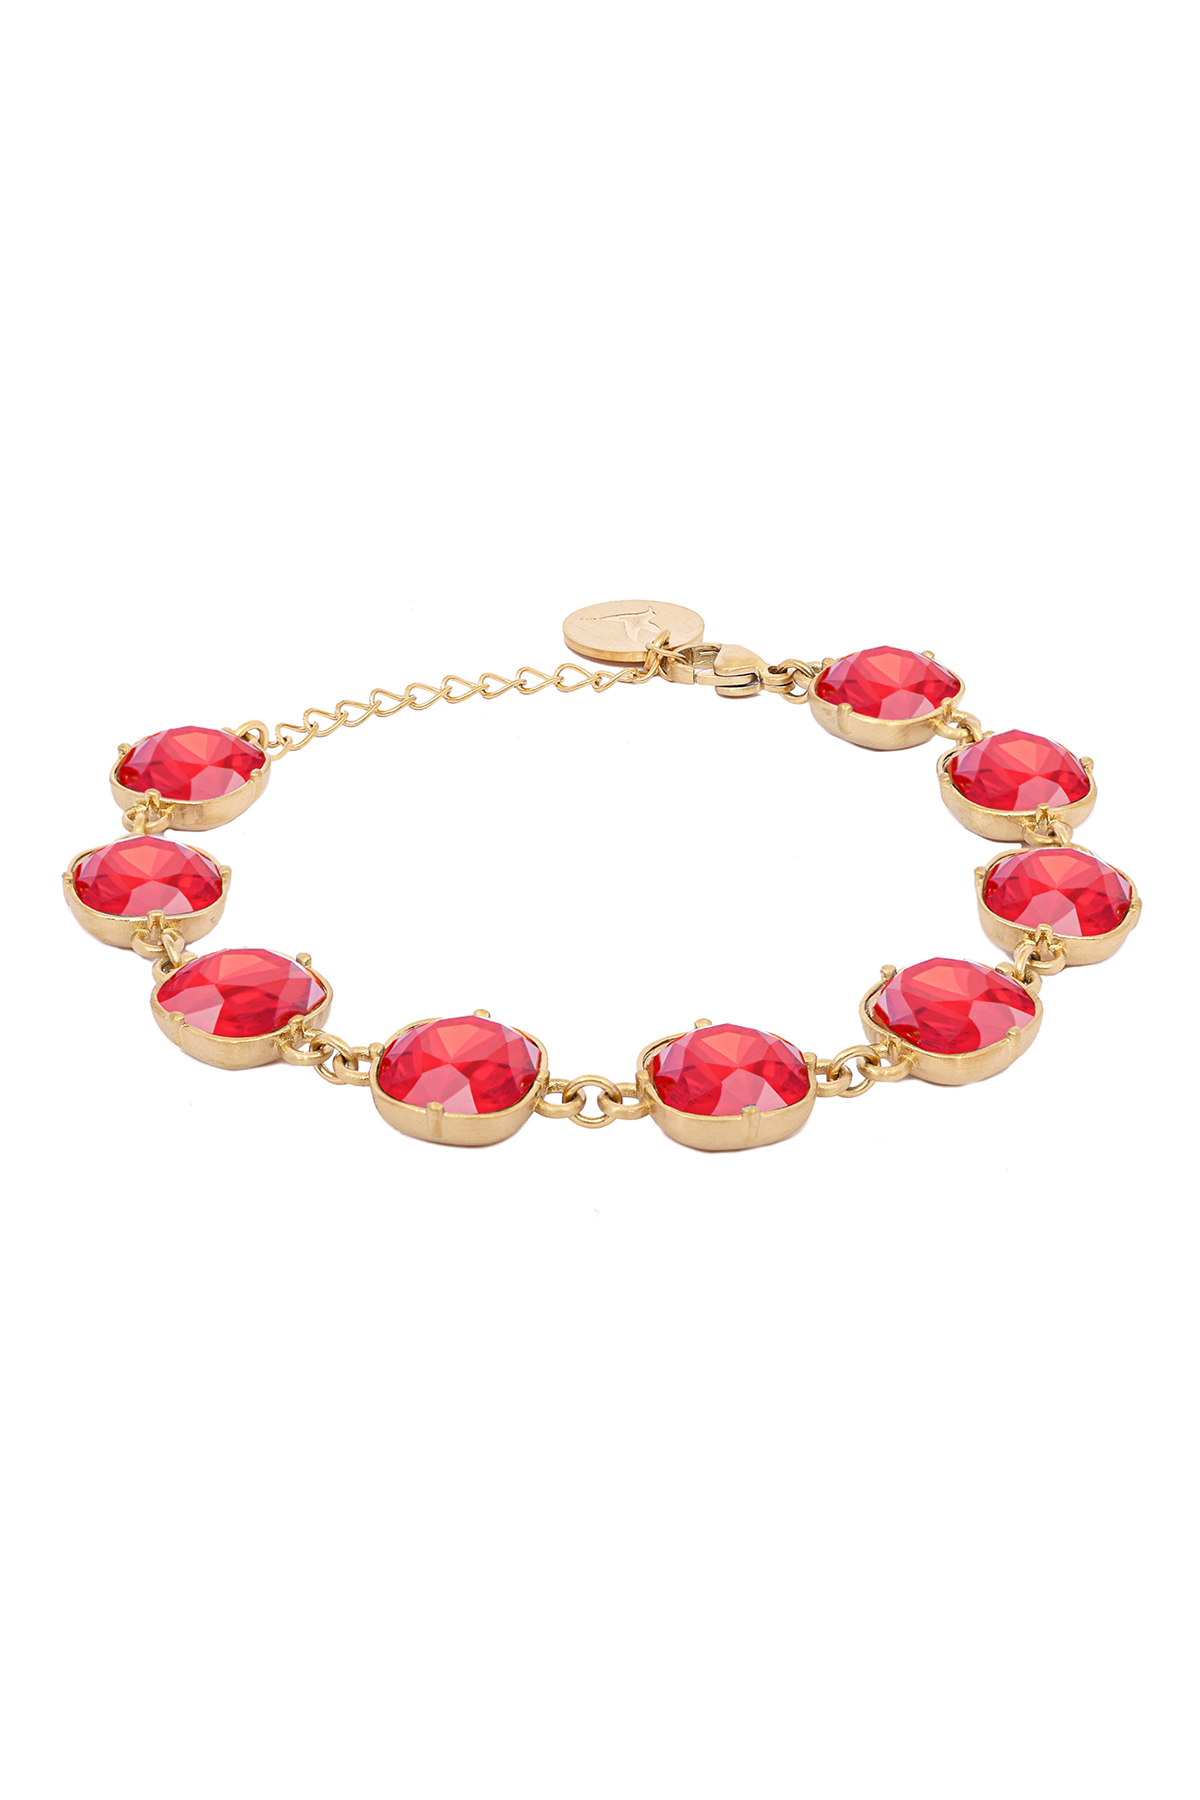 Carla Swarovski lux bracelet - Light Siam